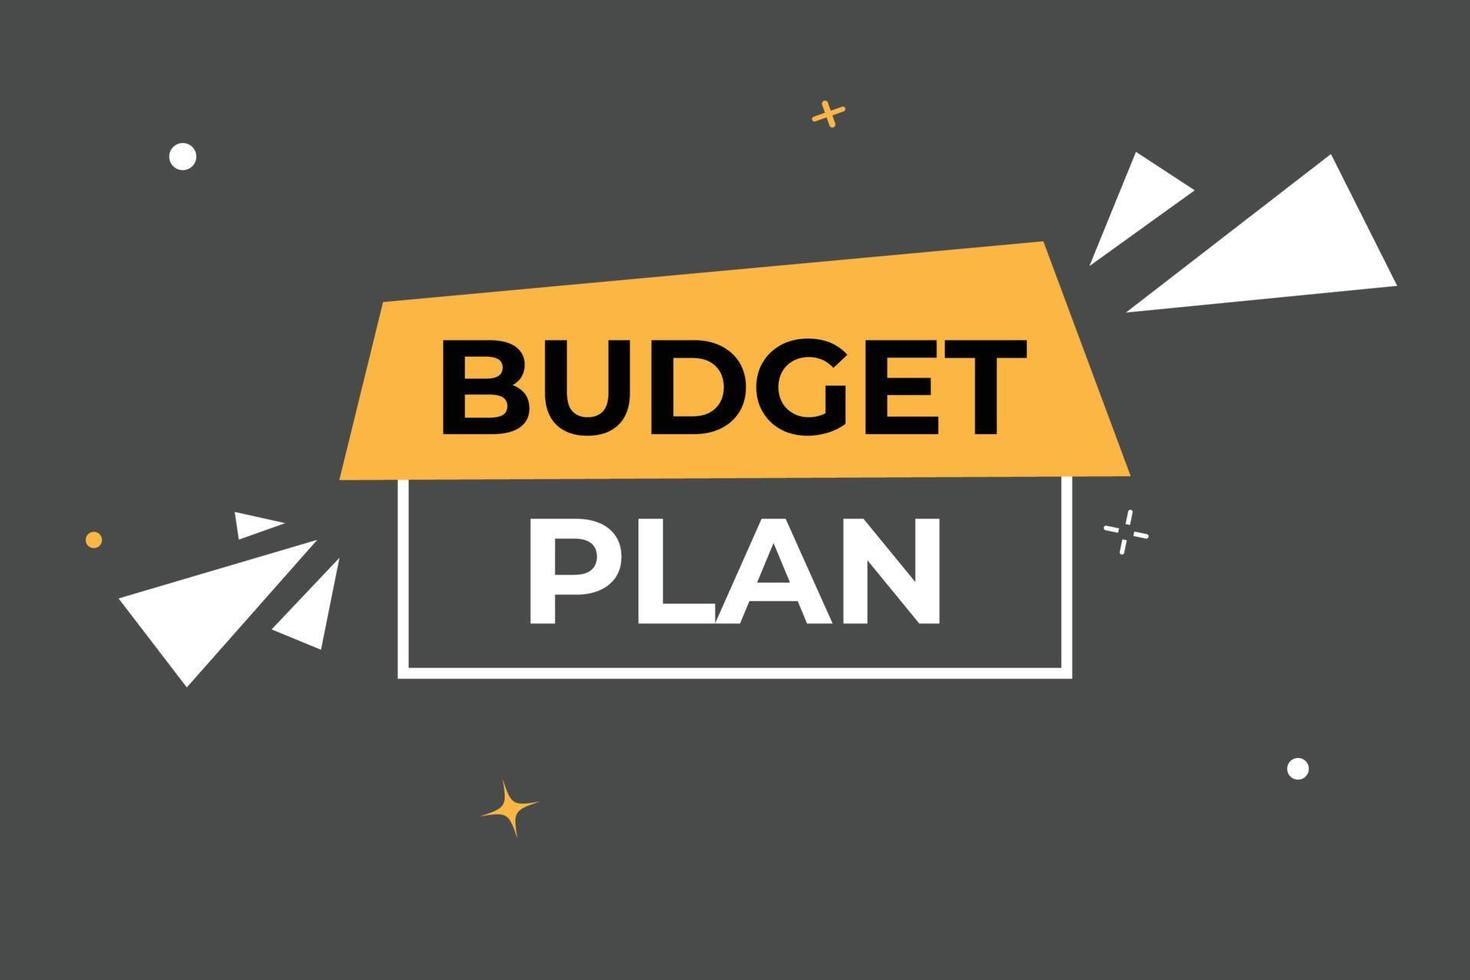 begroting plan knop. web sjabloon, toespraak bubbel, banier etiket begroting plan. teken icoon vector illustratie